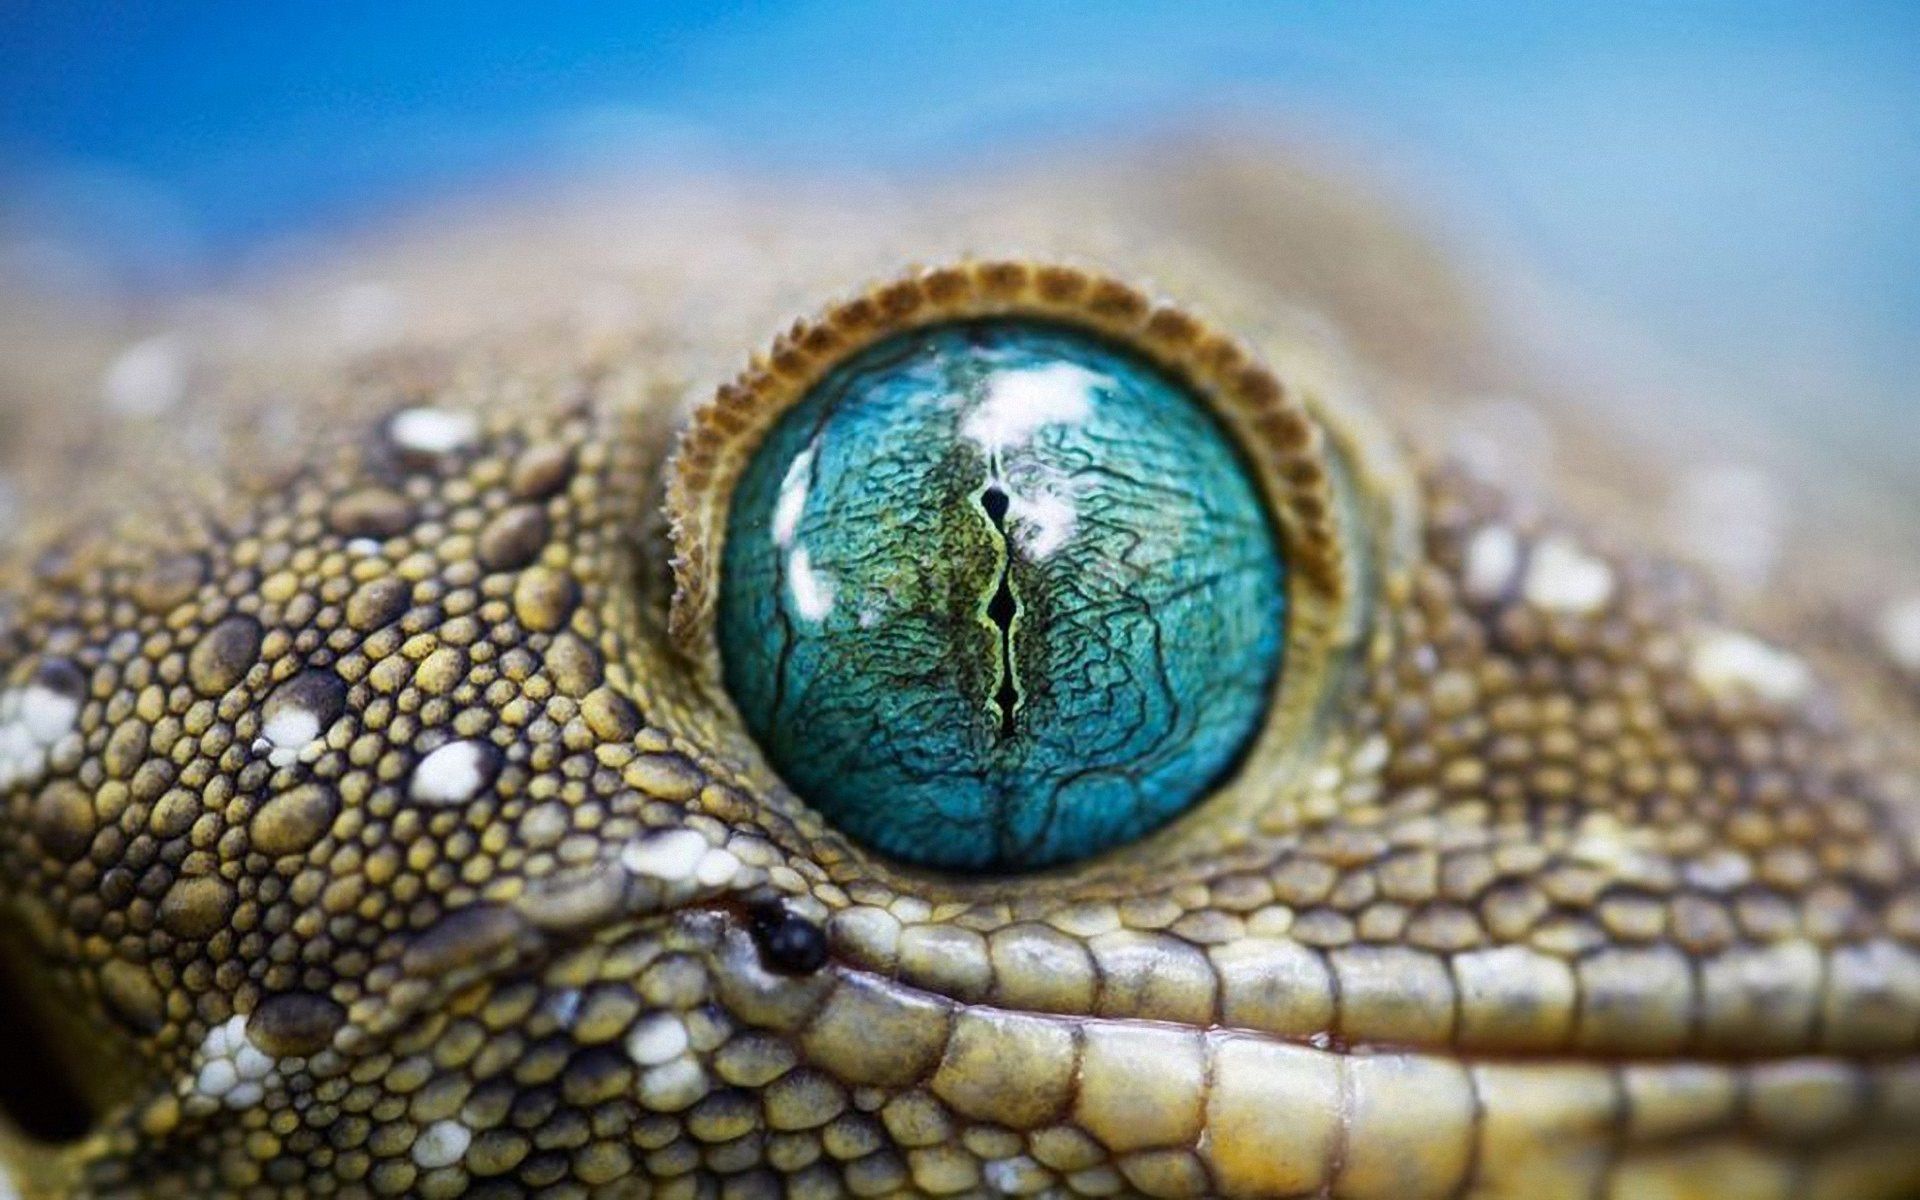 eye close up - Google Search | Beautiful | Pinterest | Reptiles ...